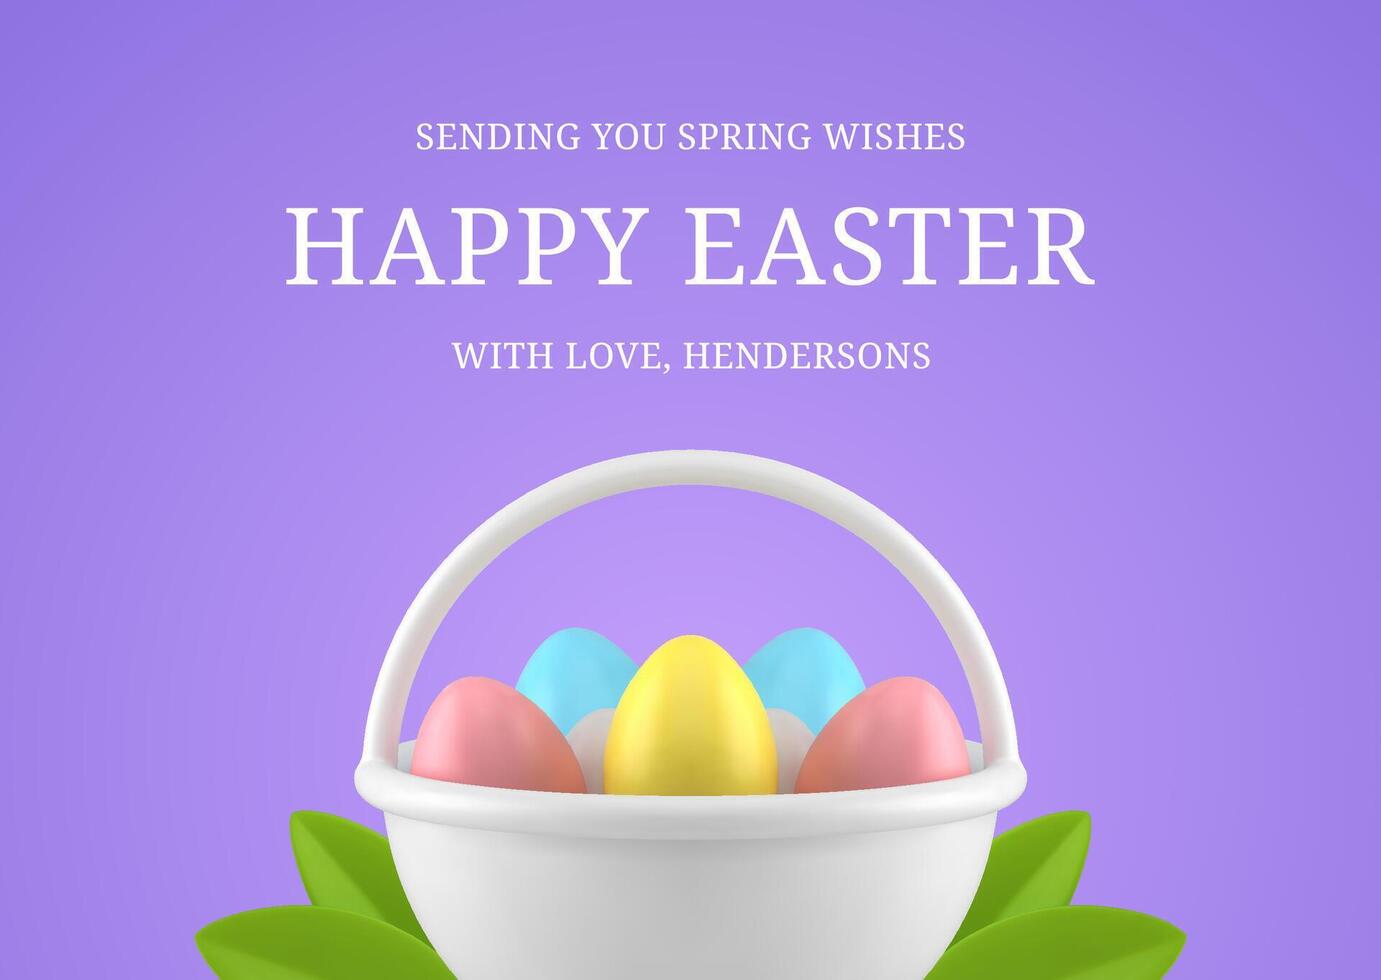 contento Pascua de Resurrección pintado pollo huevos cesta primavera verde hojas follaje 3d saludo tarjeta diseño modelo vector